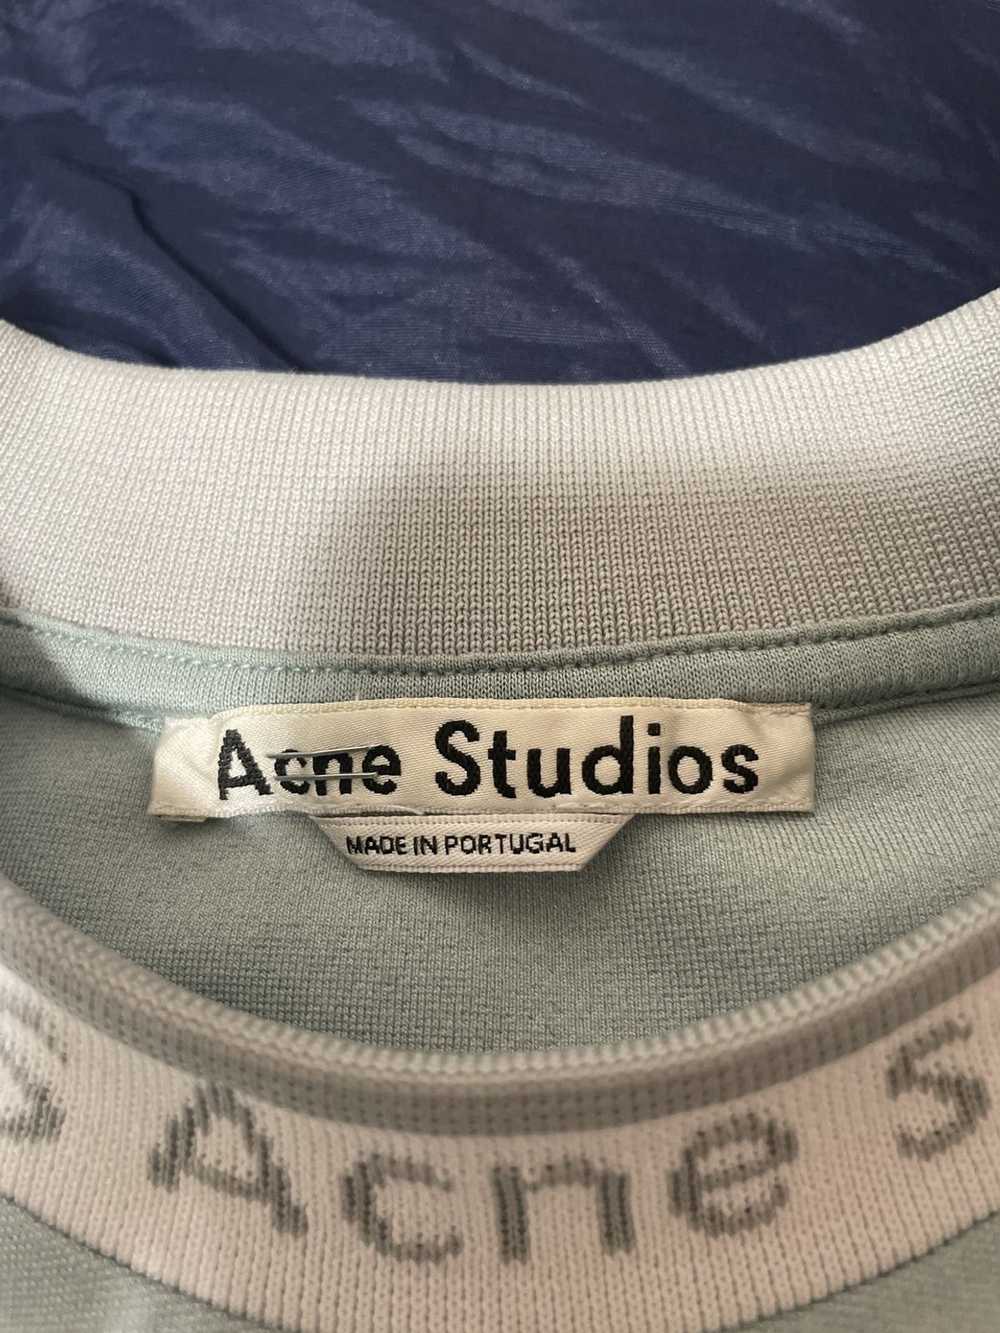 Acne Studios Acne studio collar logo - image 3